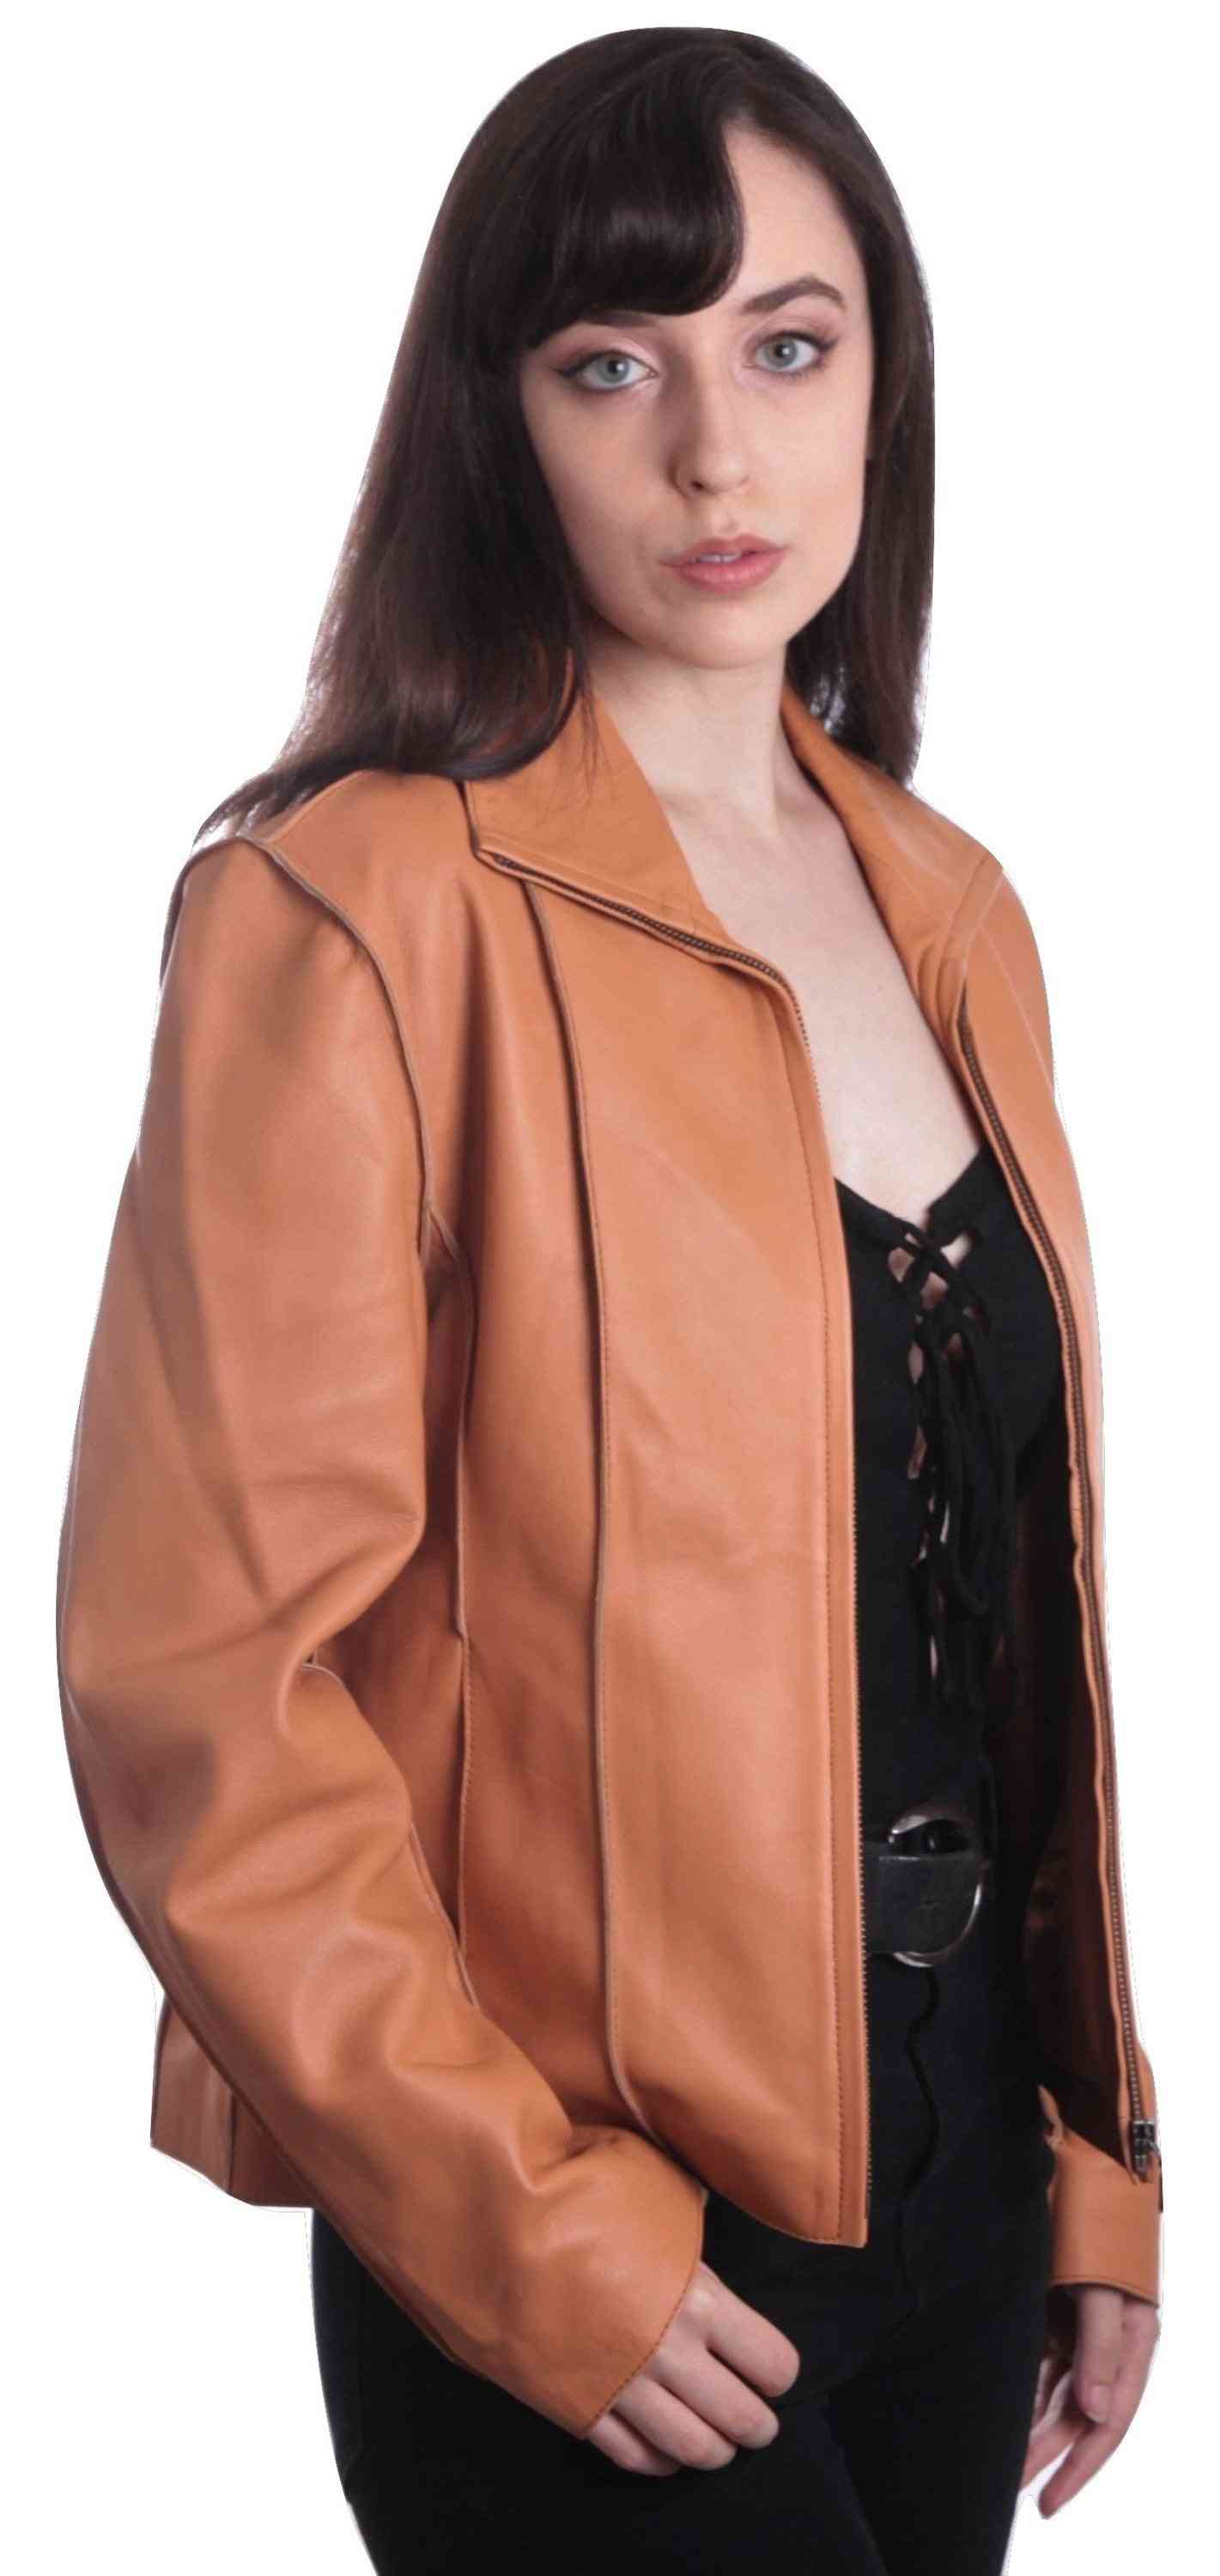 Womens Sheepskin Leather Jacket